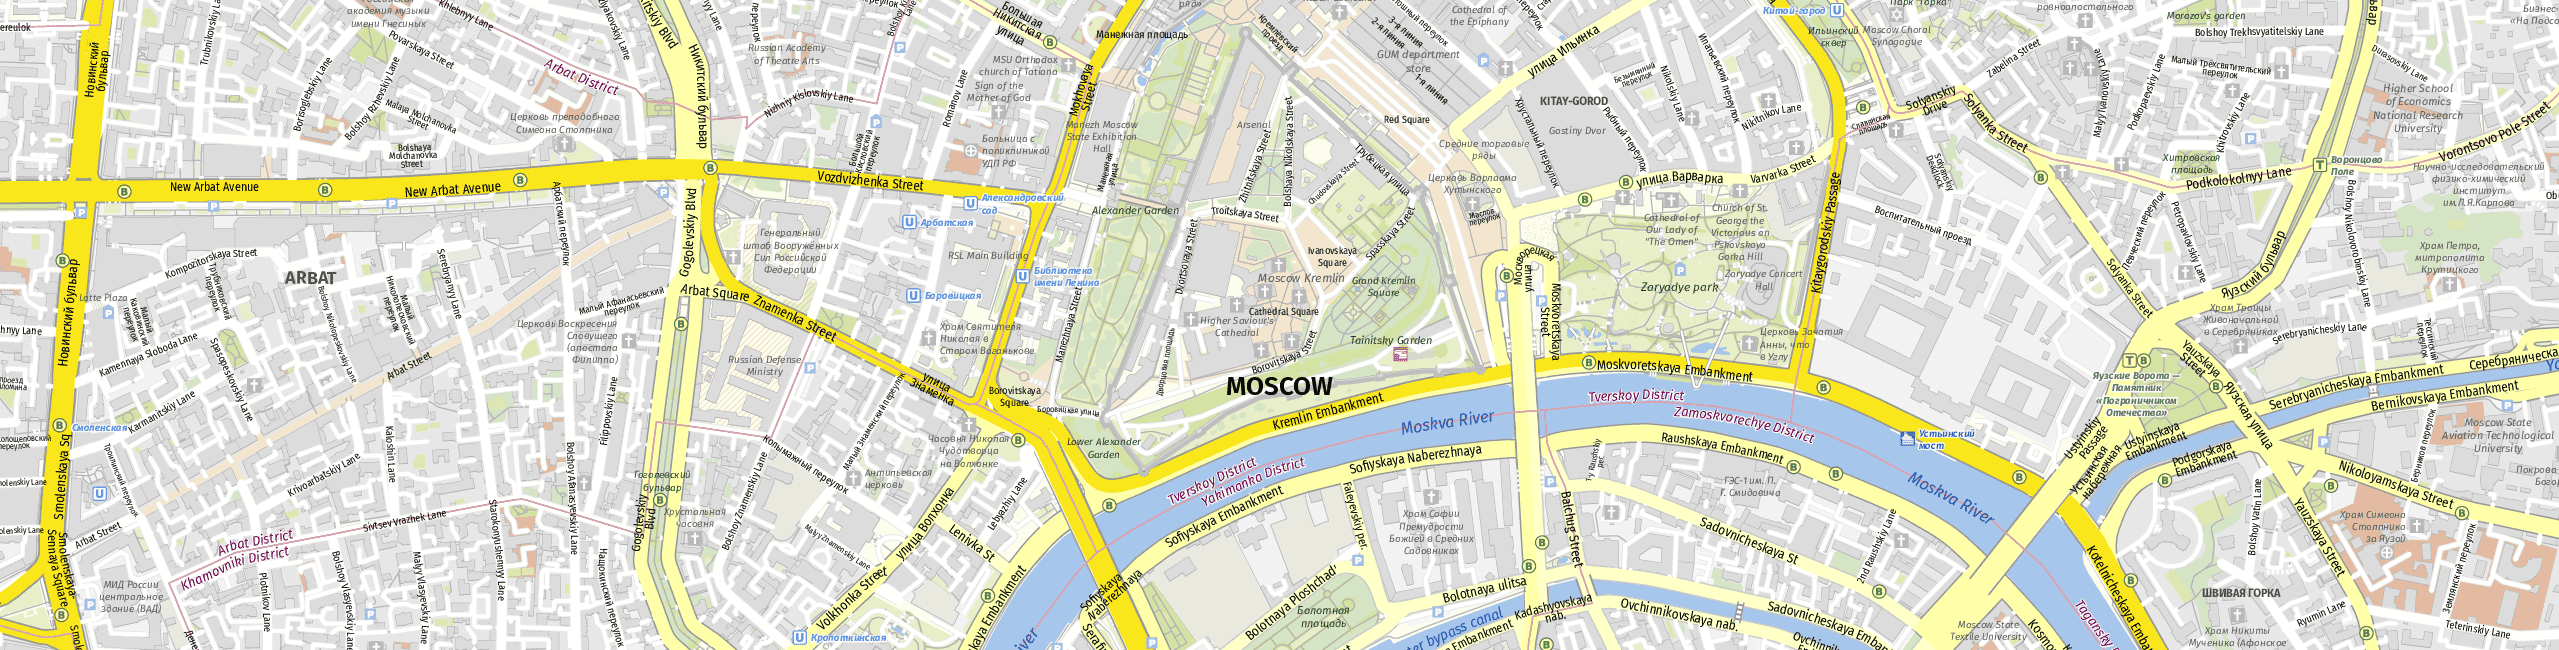 Stadtplan Moskau zum Downloaden.